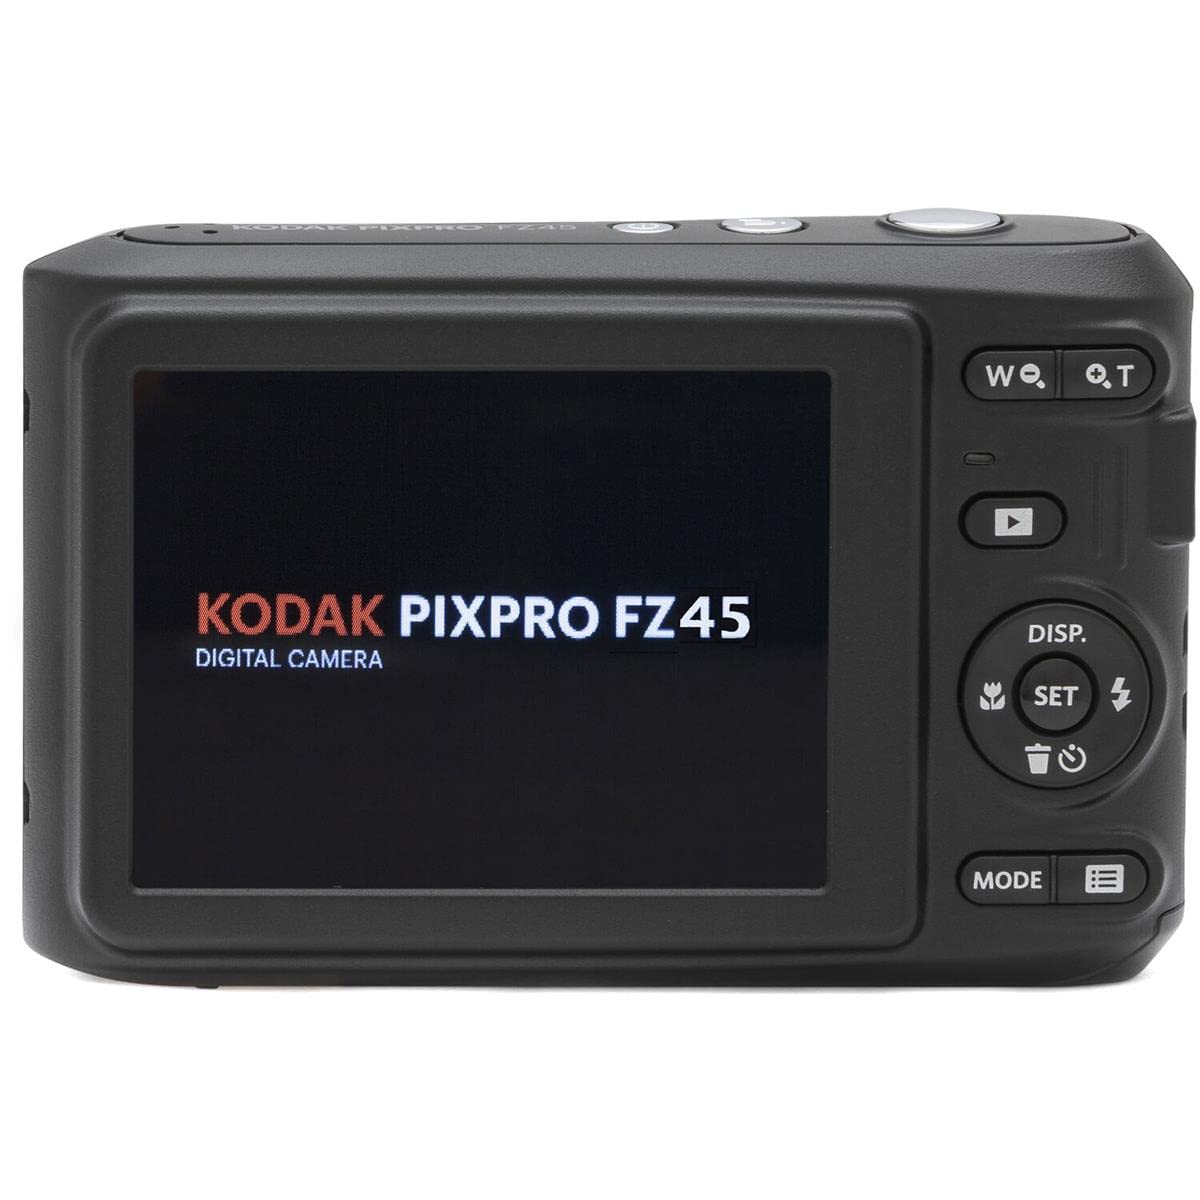 Kodak PIXPRO FZ45 Friendly Zoom 16MP Full HD Digital Camera, Black, Bundle with 32GB Memory Card and Camera Bag